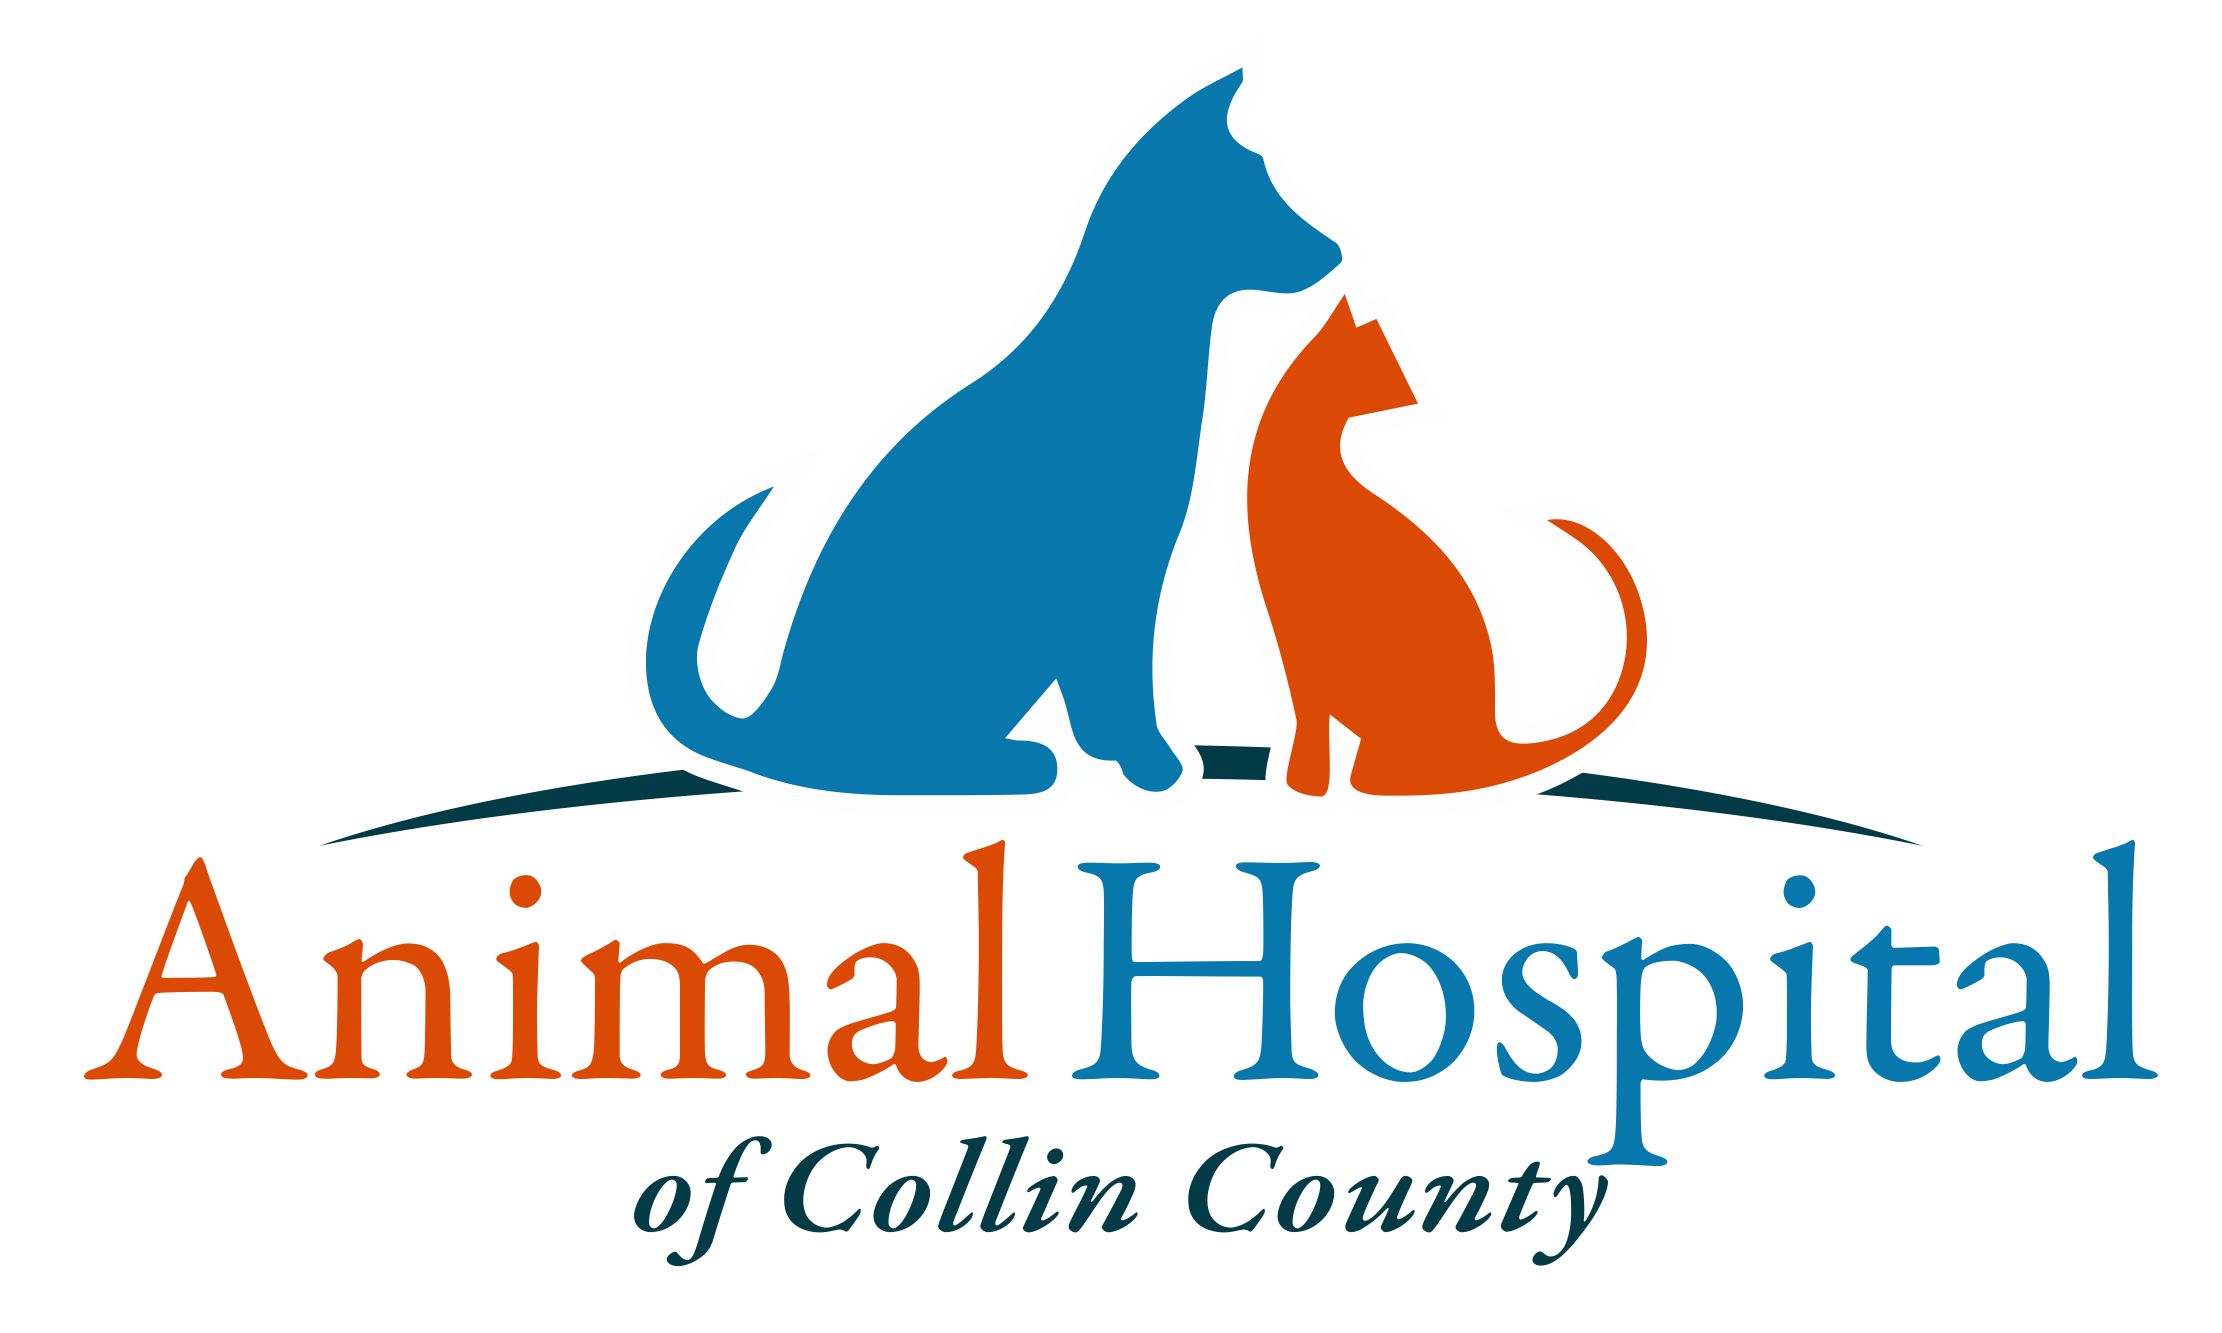 Animal Hospital of Collin County